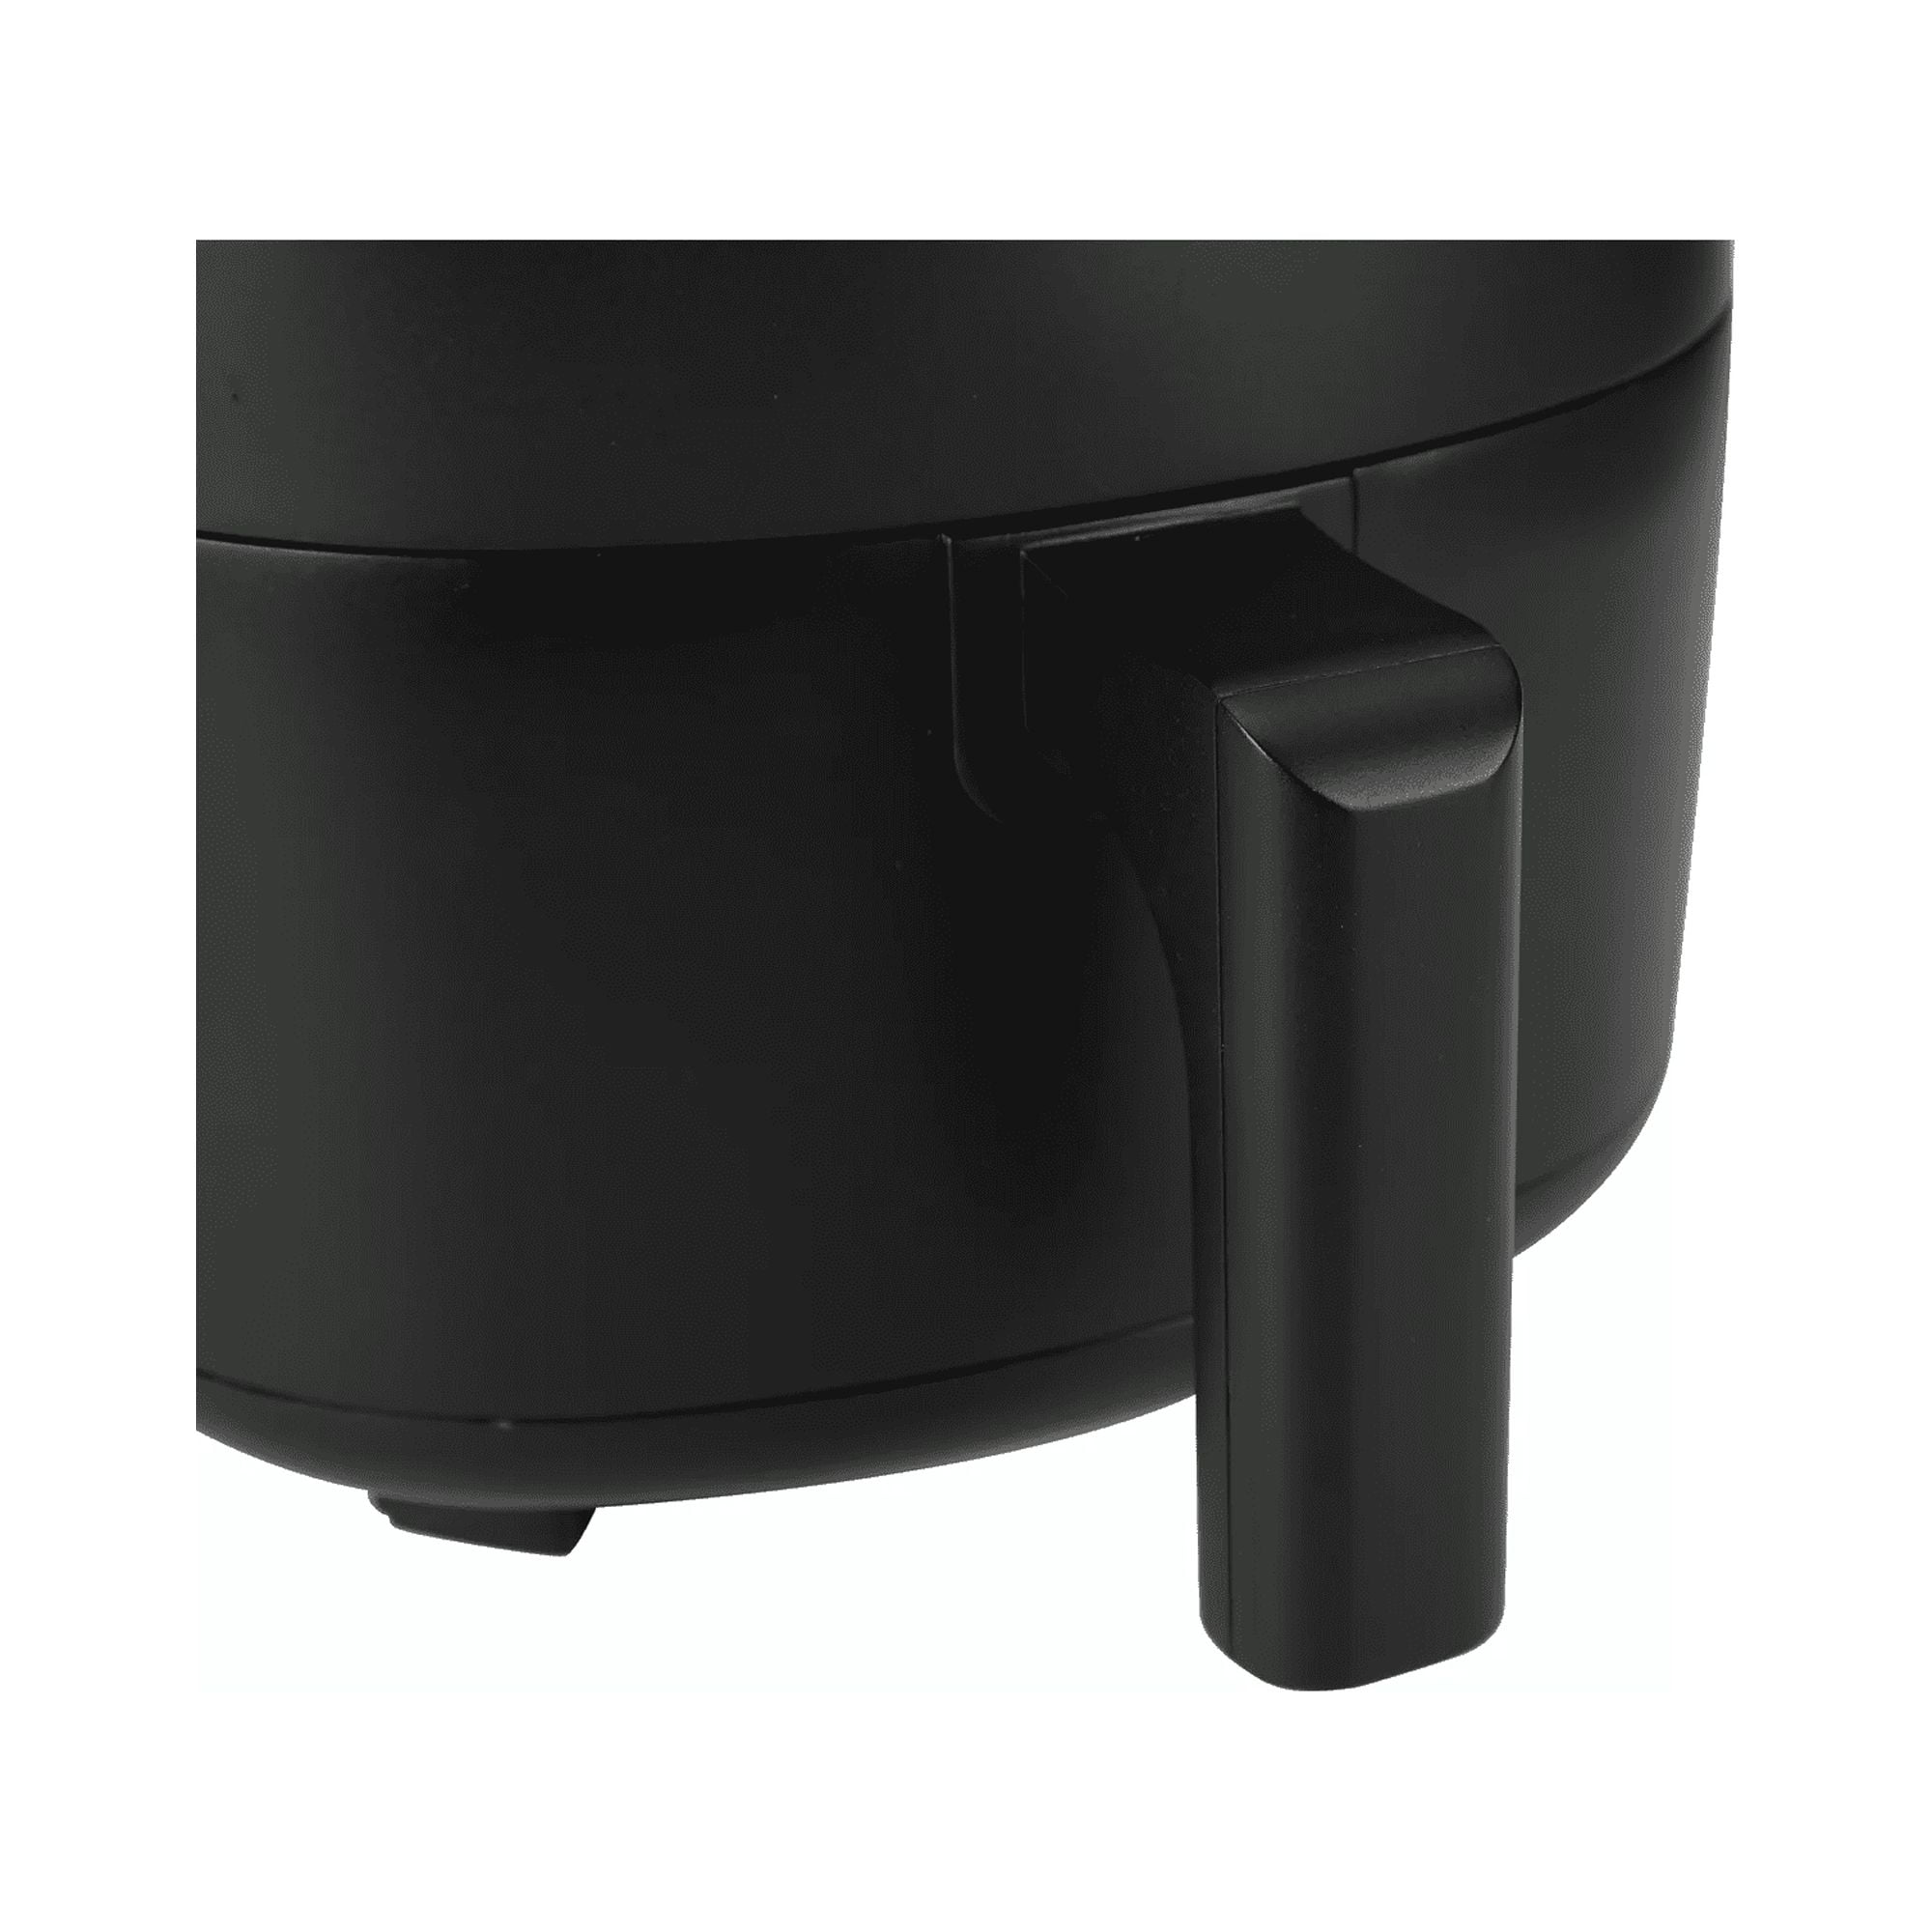 Mainstays Quart Compact Air Fryer Non-Stick Dishwasher Safe Basket